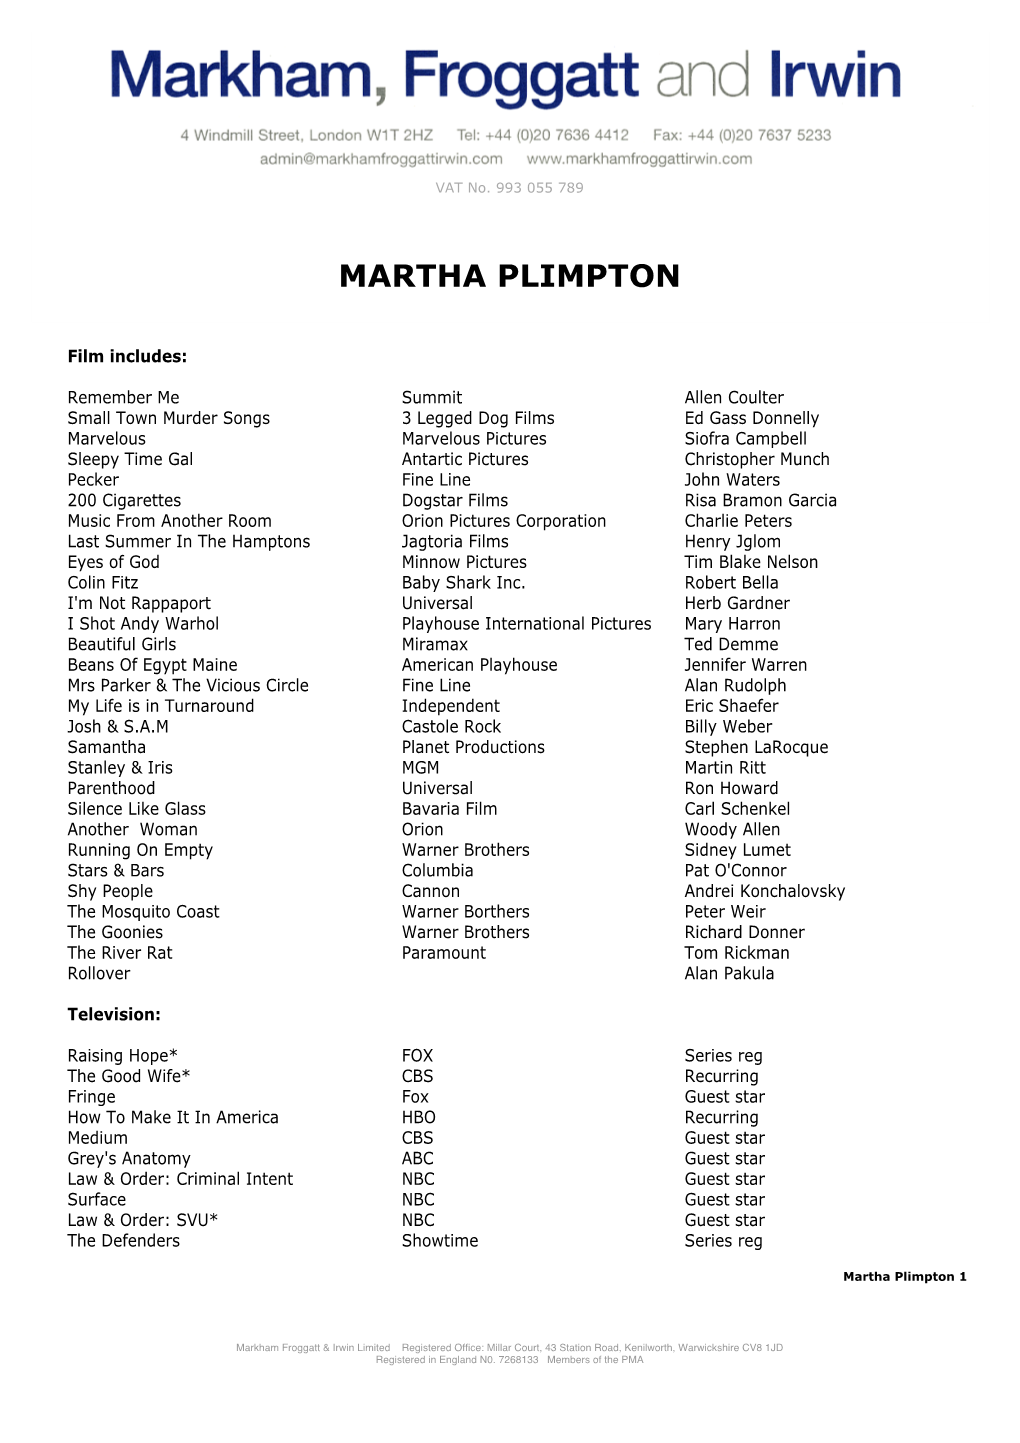 Martha Plimpton